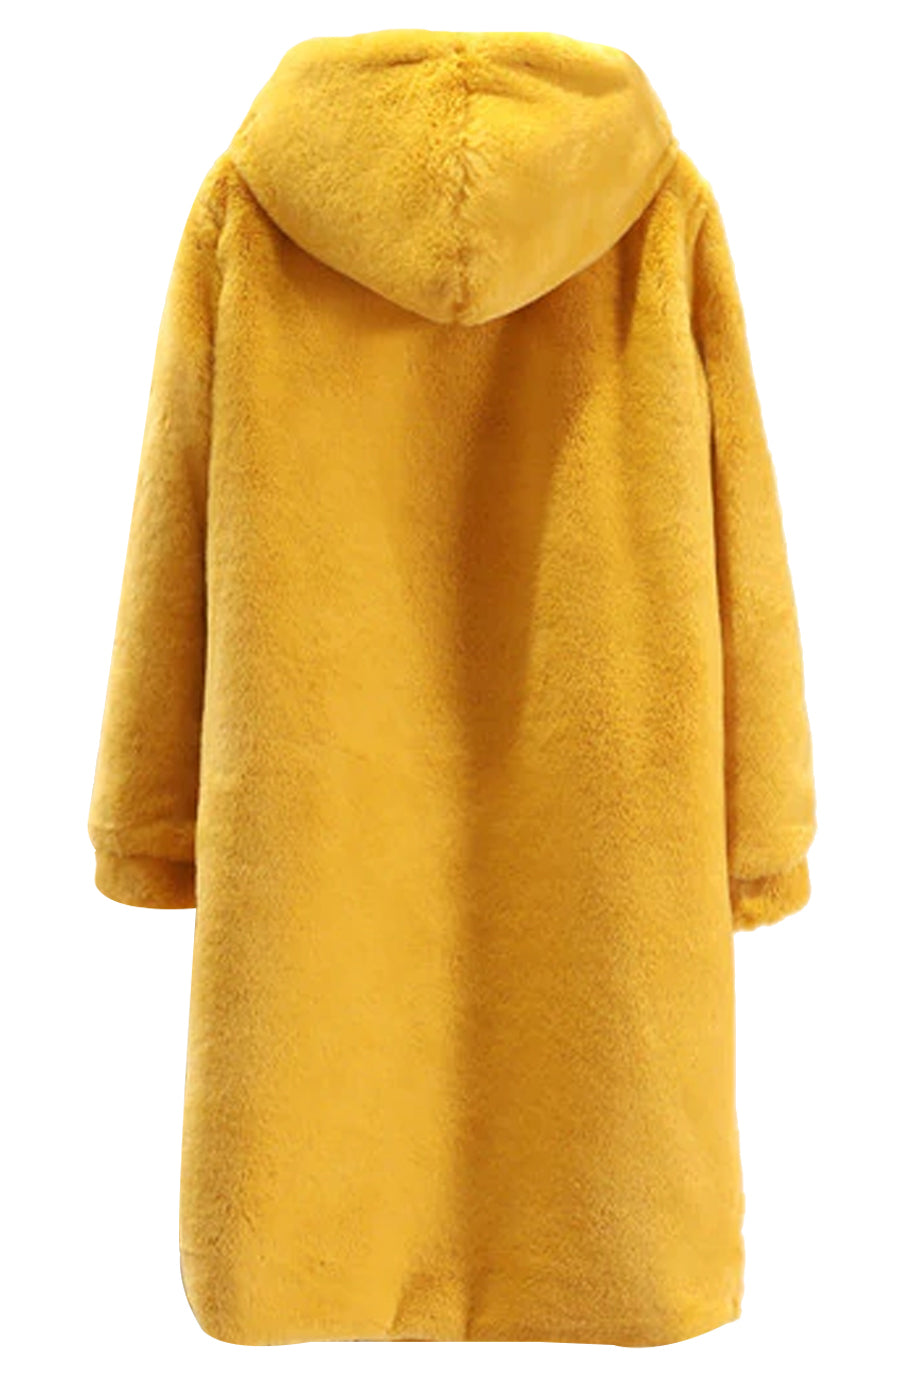 Seronia Μουσταρδί Κίτρινο Παλτό με Συνθετική Γούνα και Κουκούλα | Γυναικεία Ρούχα - Παλτό Πανοφώρια